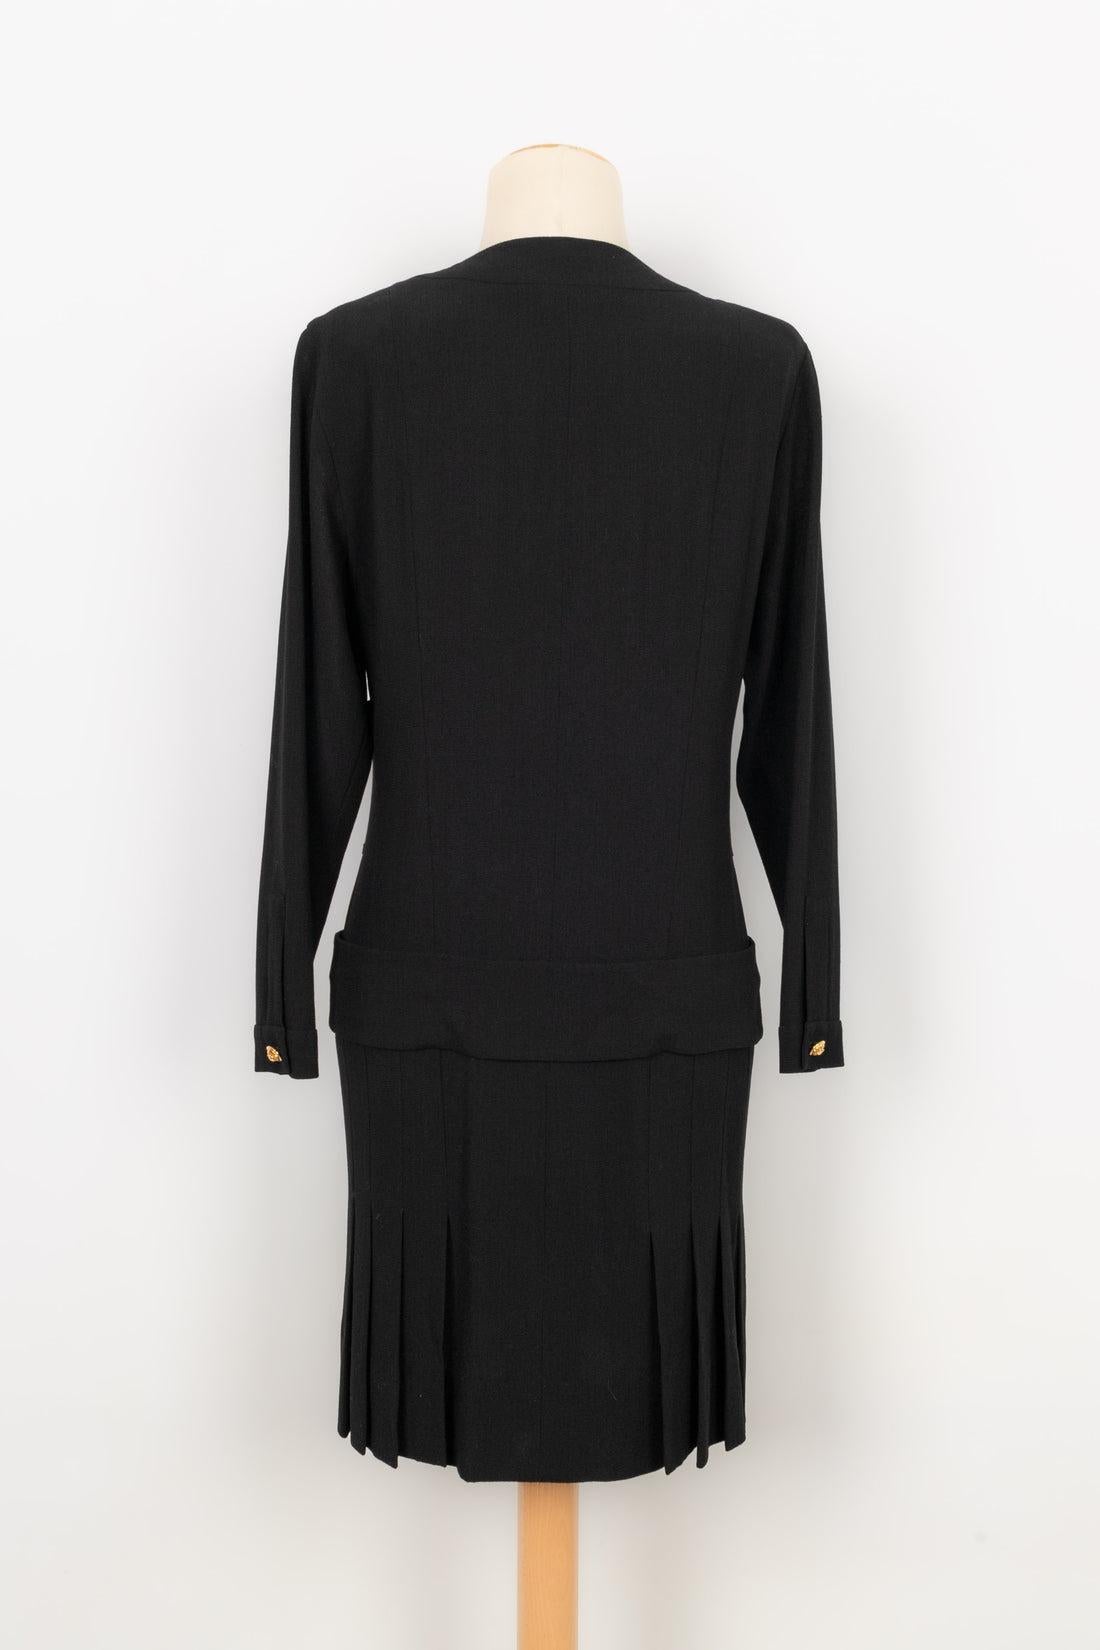 Chanel Long-Sleeved Black Dress, 1980S In Excellent Condition For Sale In SAINT-OUEN-SUR-SEINE, FR